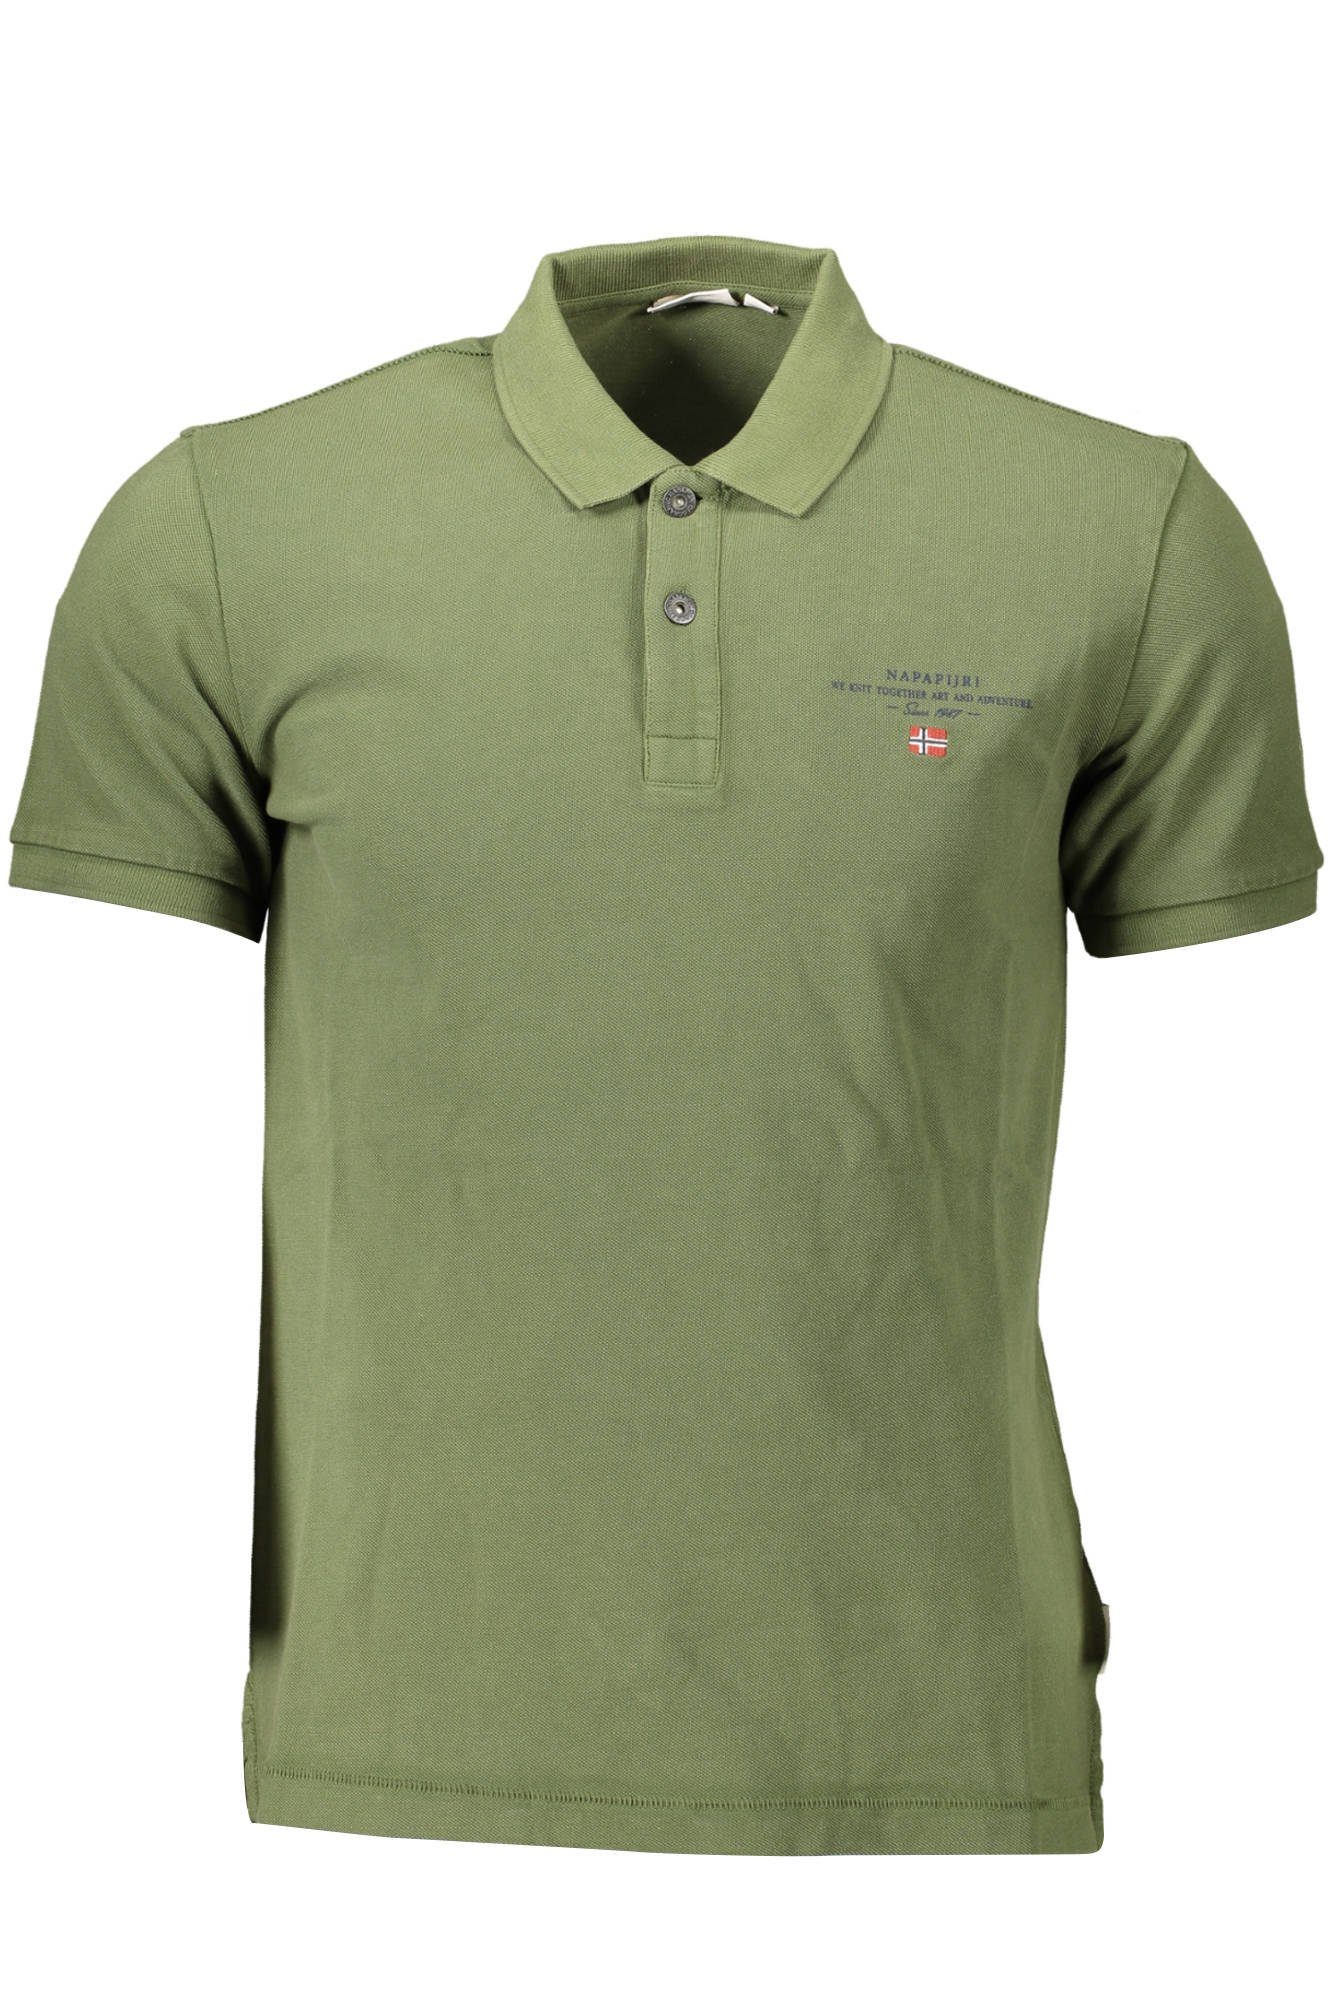 Napapijri Poloshirt Napapijri T-Shirt mit Polohemd (g2c green kurzarm, Herren Knöpfen cypress) Poloshirt grün